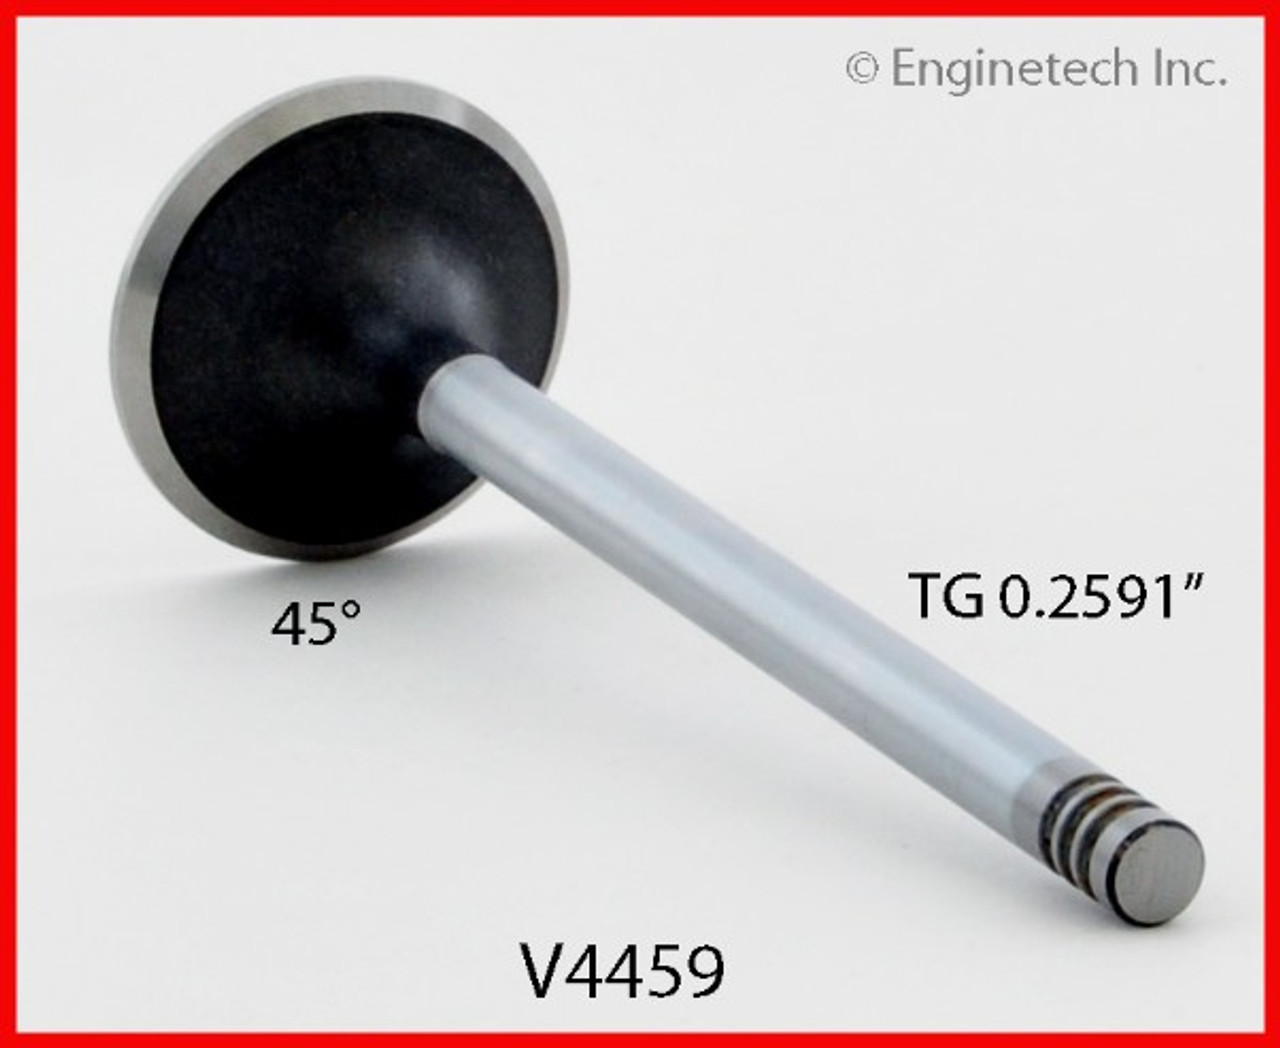 Exhaust Valve - 2013 Ram 1500 5.7L (V4459.G63)